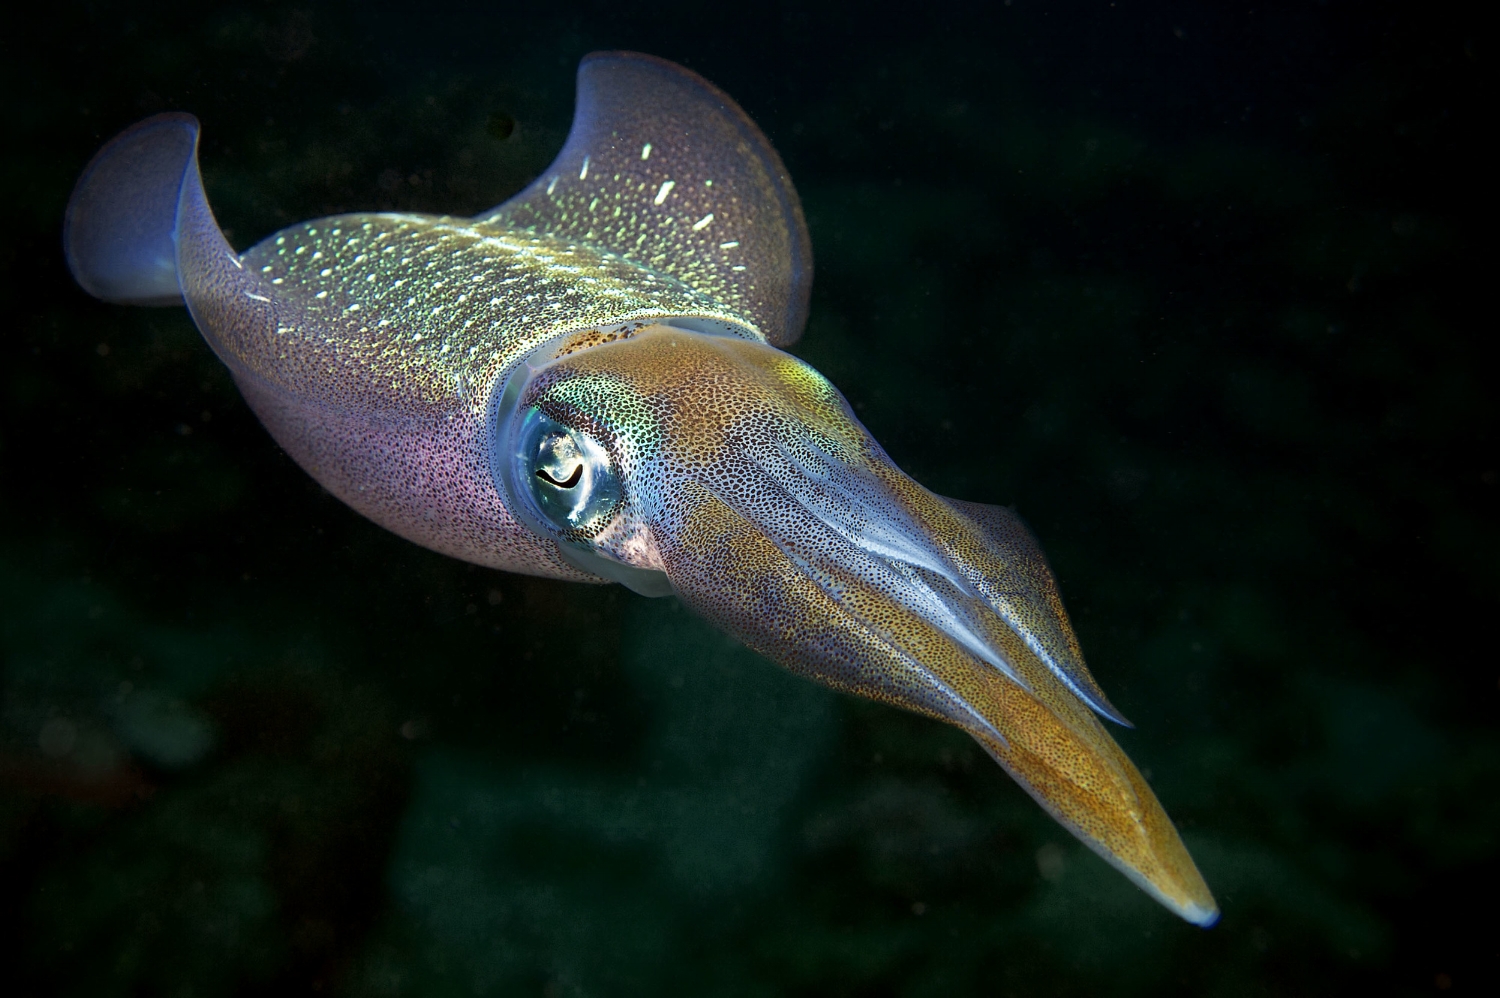  A Caribbean reef squid (Sepioteuthis sepioidea) in Bonaire on Friday, August 14, 2015. 